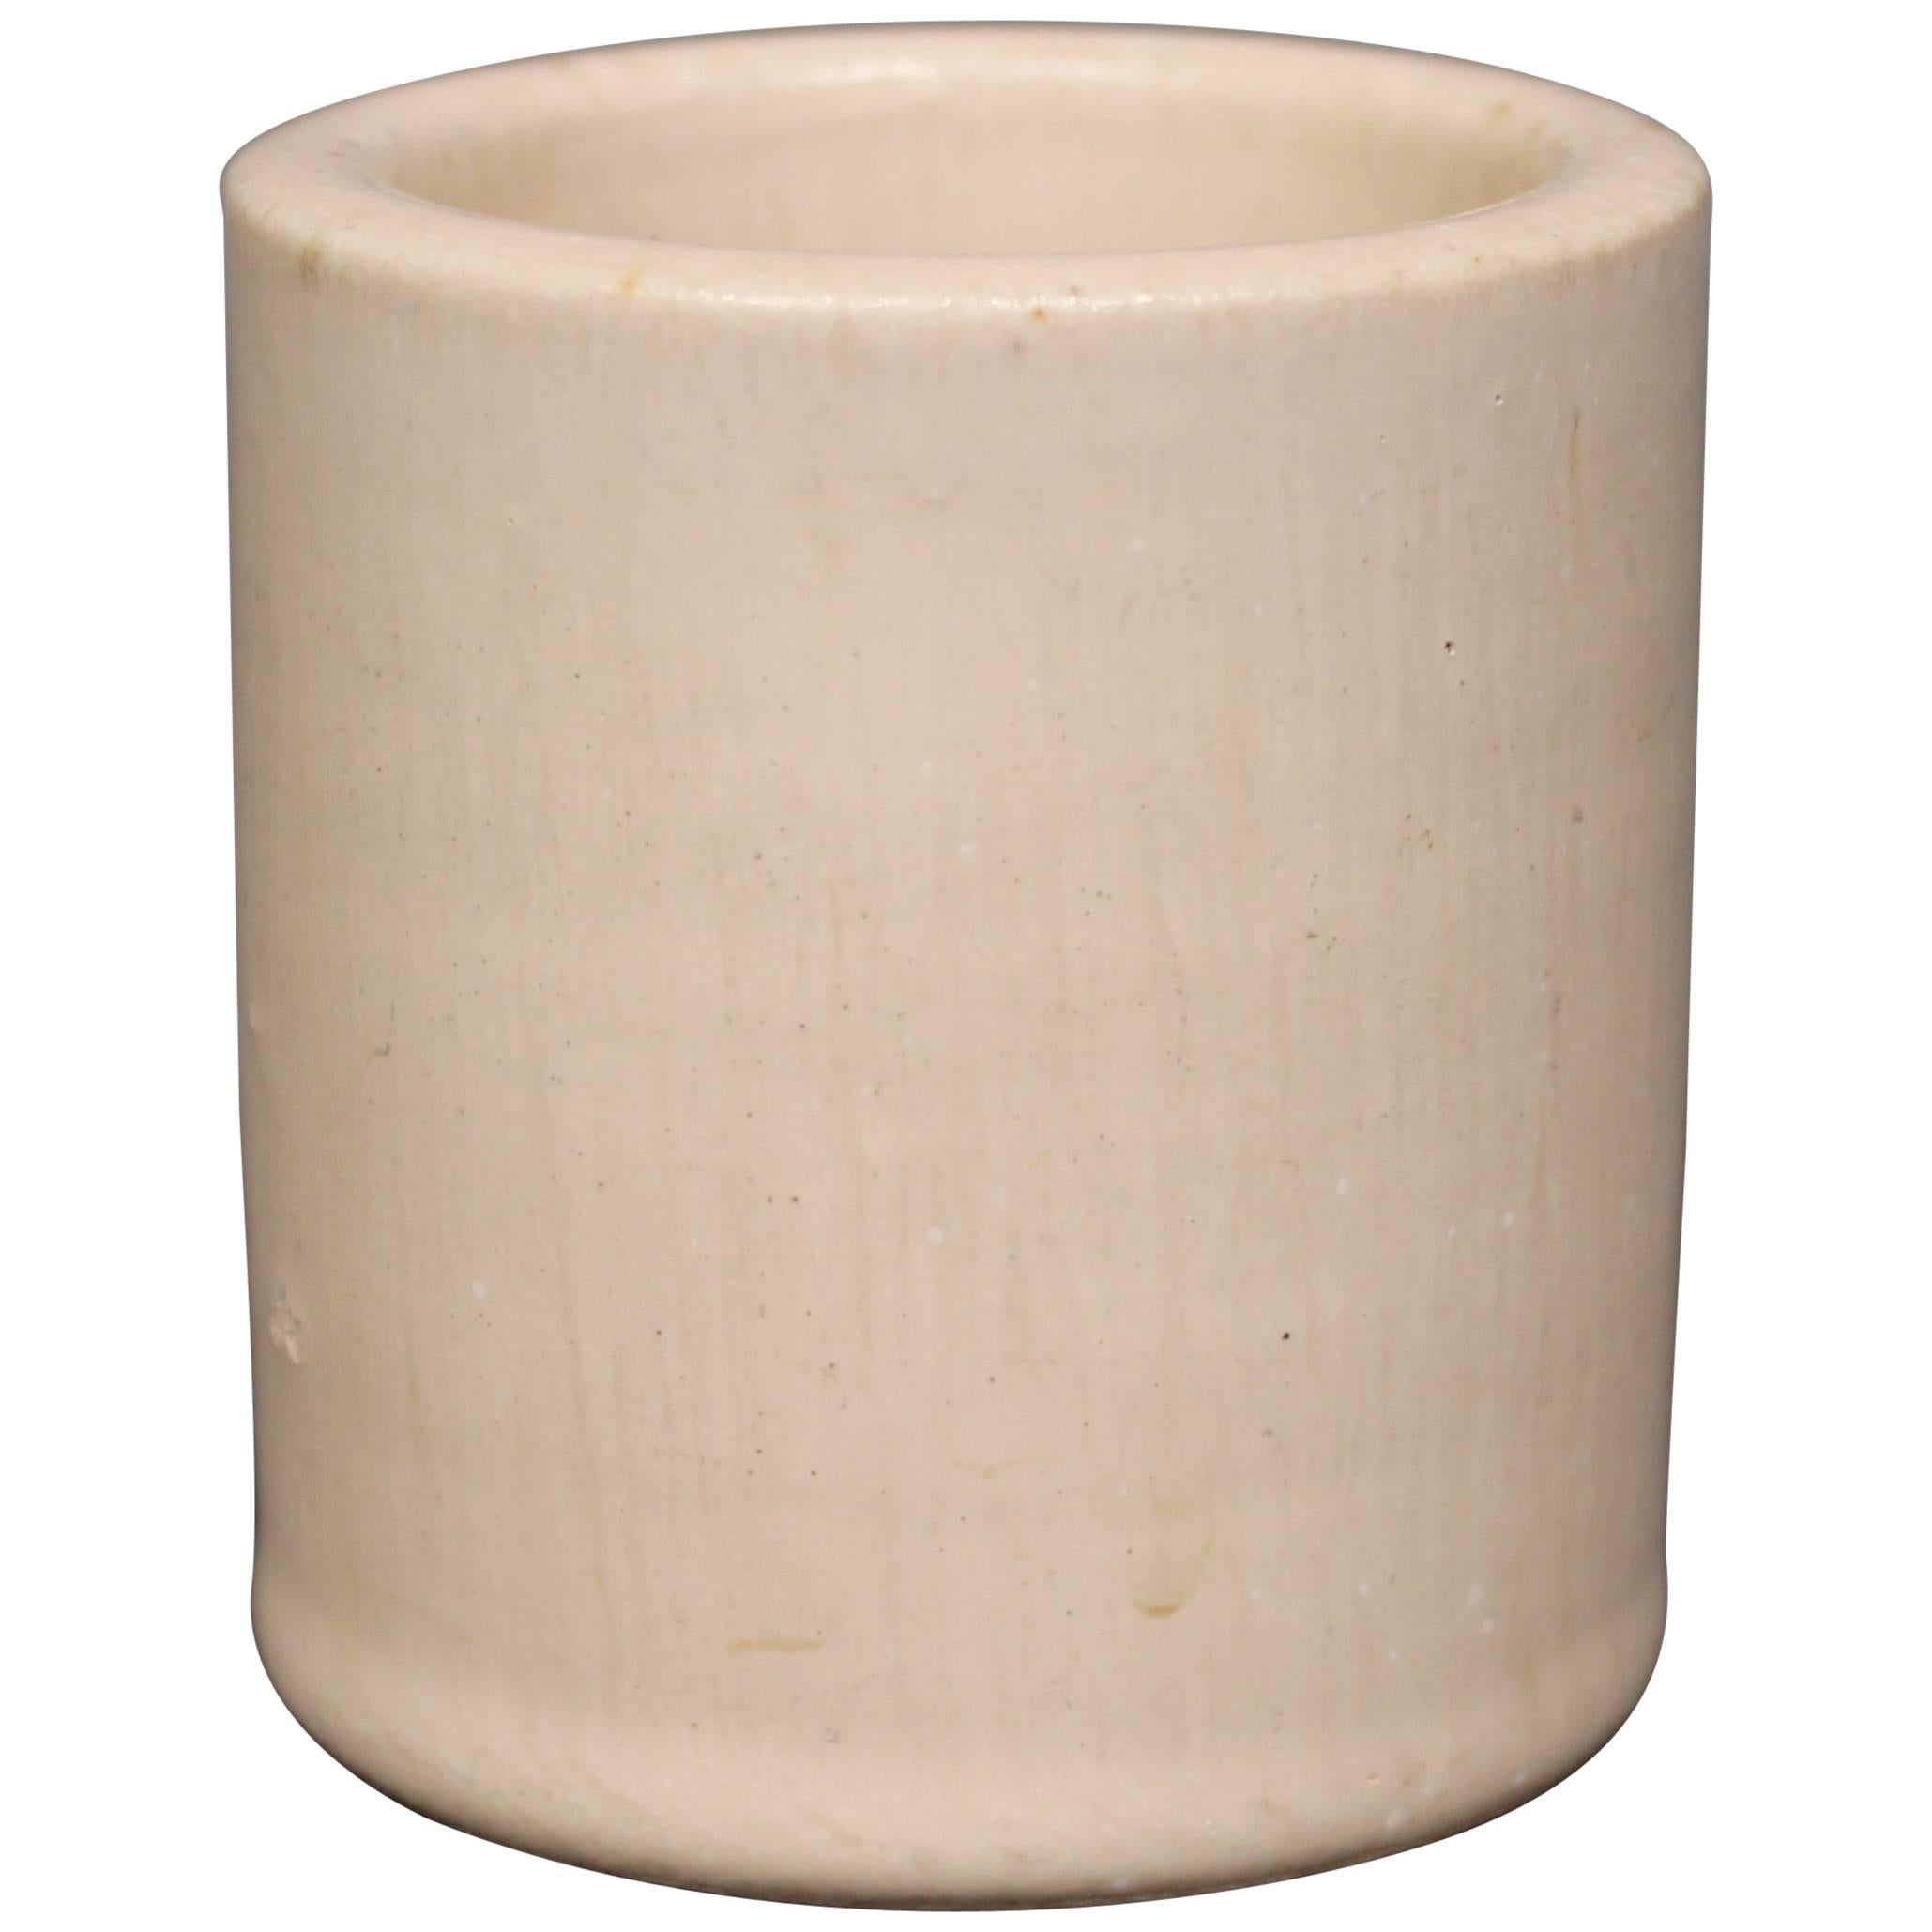 Small Ceramic Jar/Vase with a White Glaze, No.: 78 by Saxbo